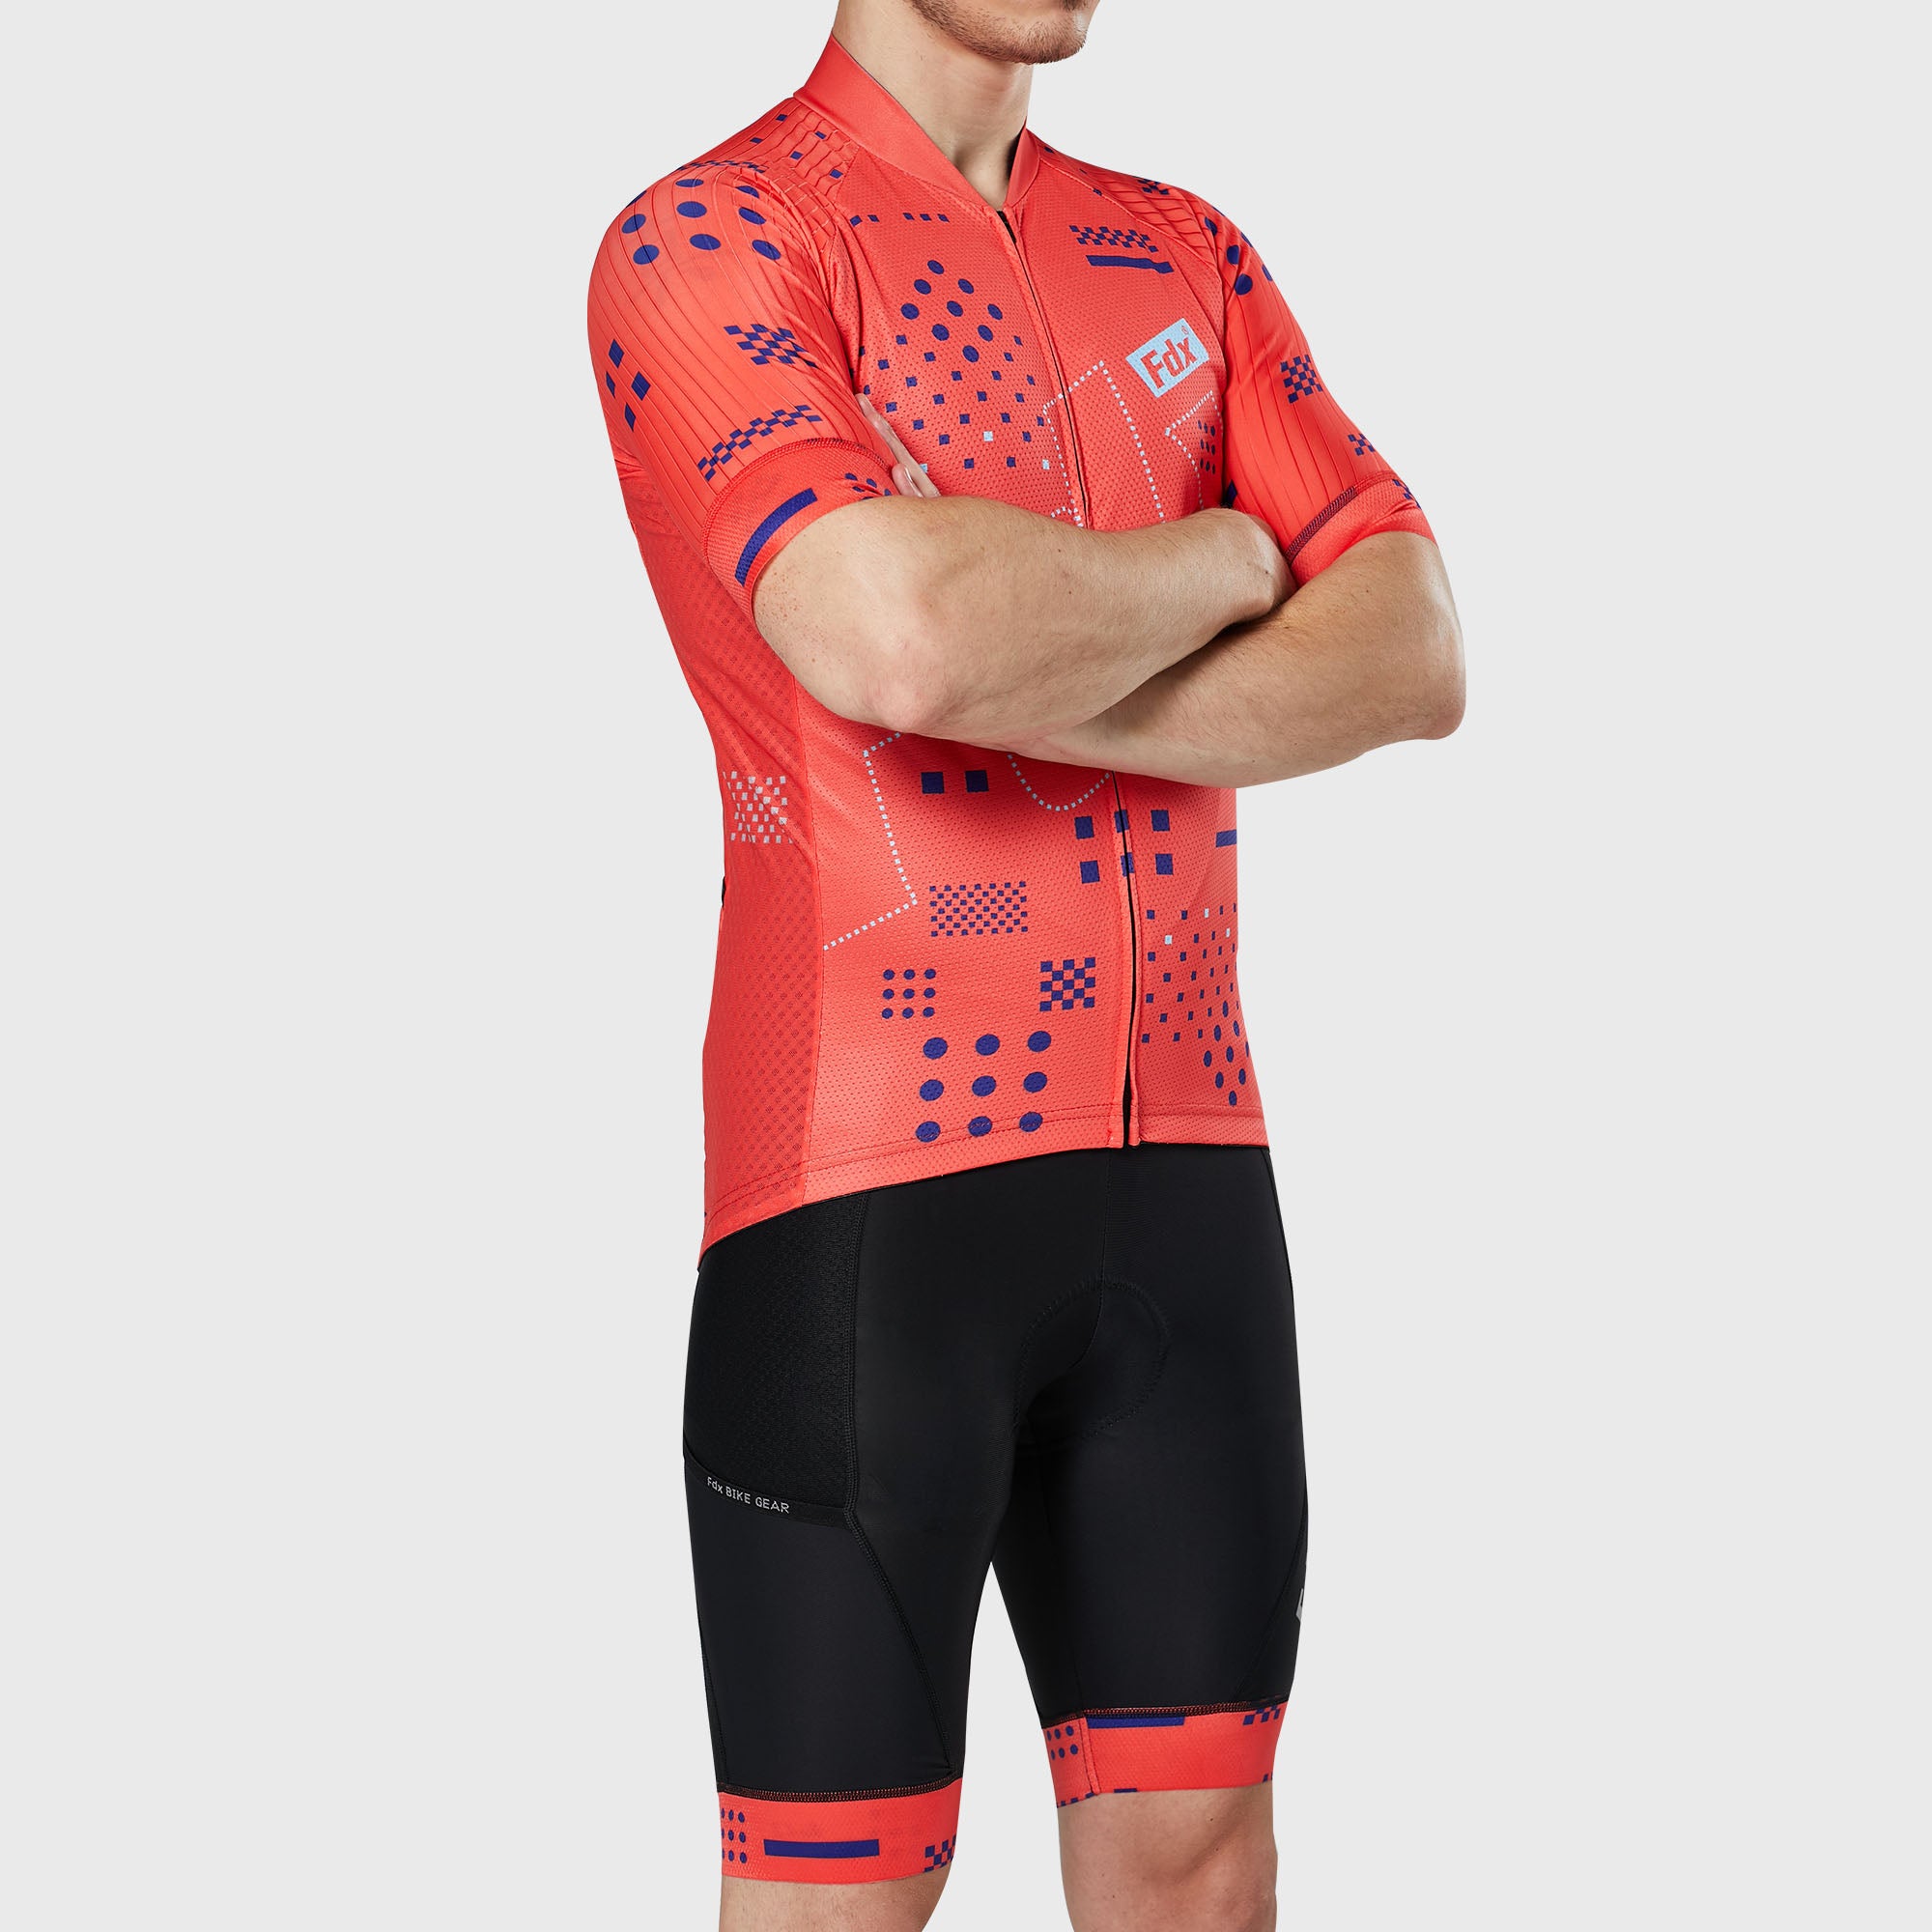 Fdx Mens Red Green Sleeve Cycling Jersey & Gel Padded Bib Shorts Best Summer Road Bike Wear Light Weight, Hi-viz Reflectors & Pockets - All Day